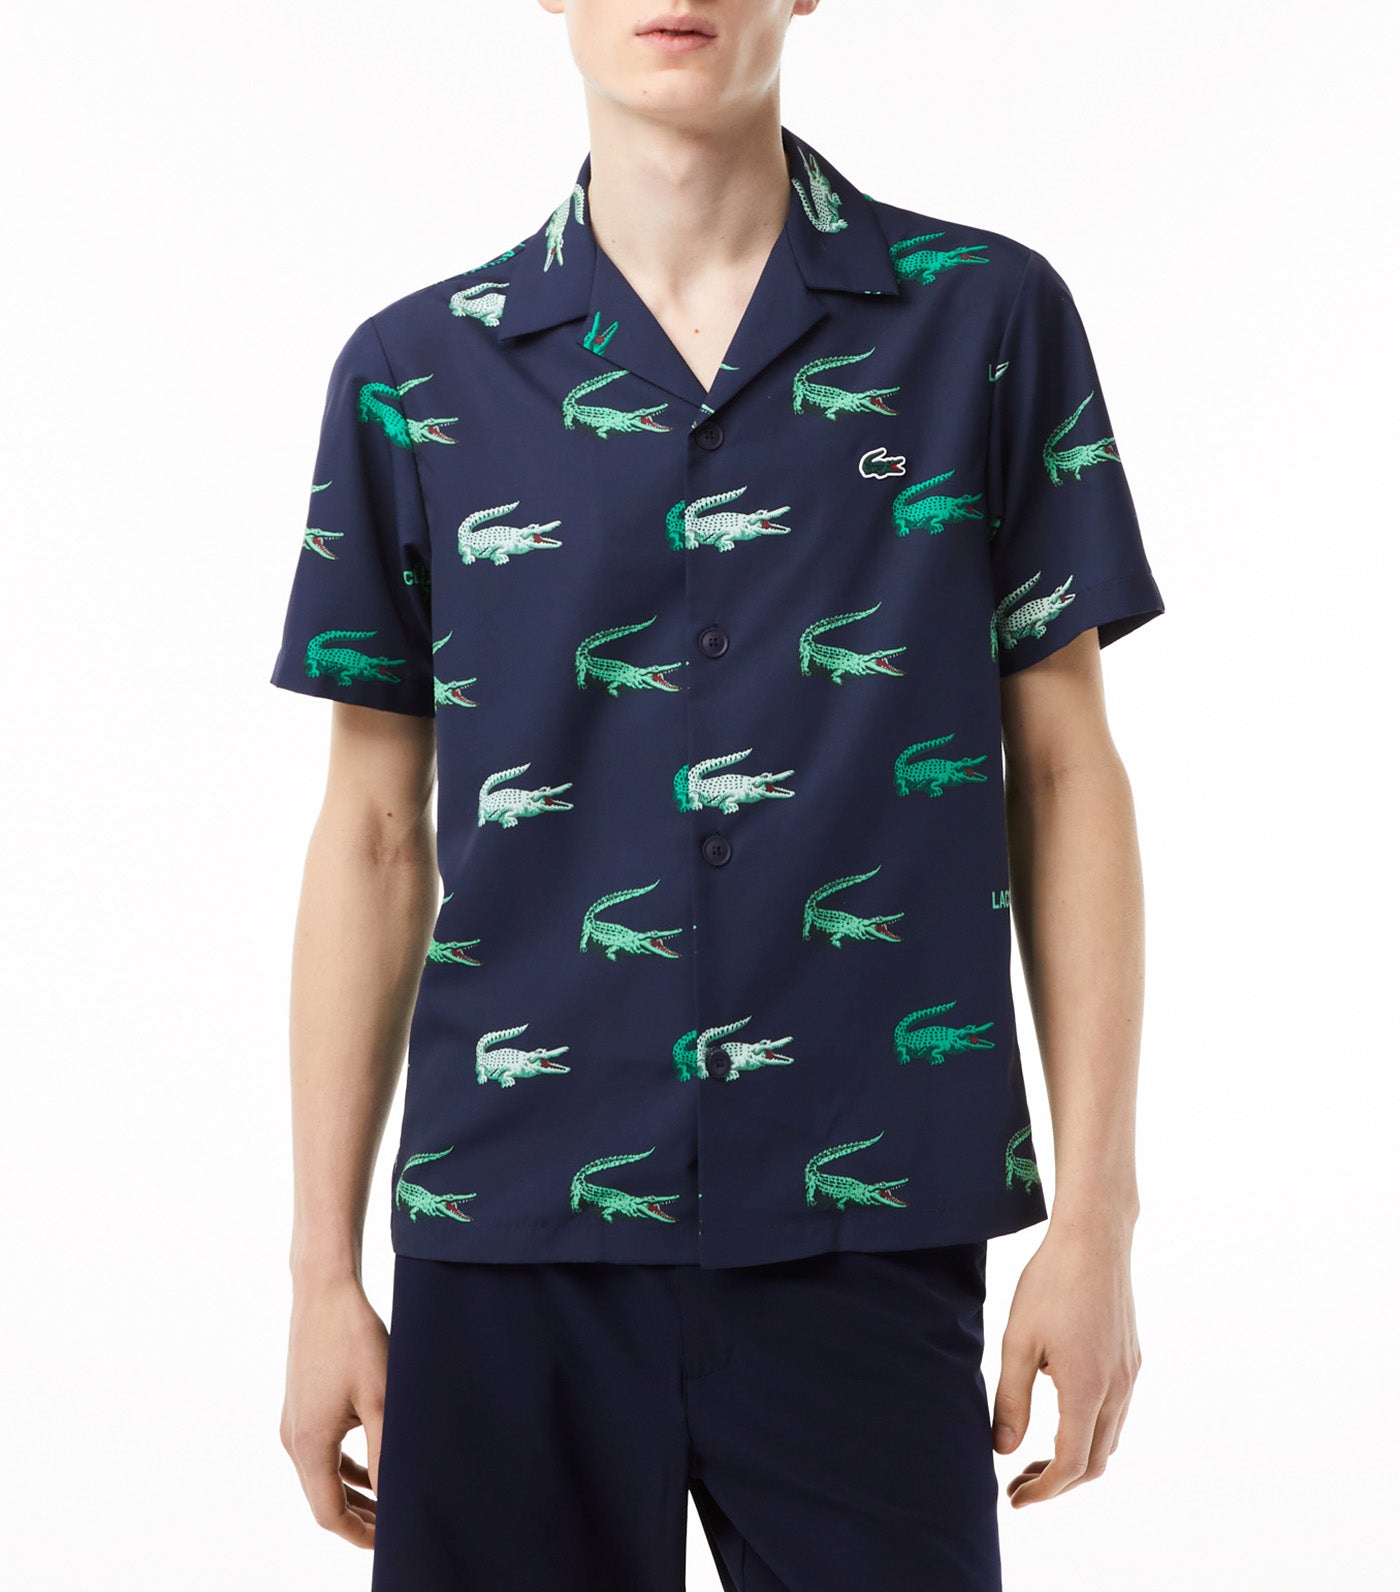 Men’s Golf Printed Short-Sleeved Shirt Navy Blue